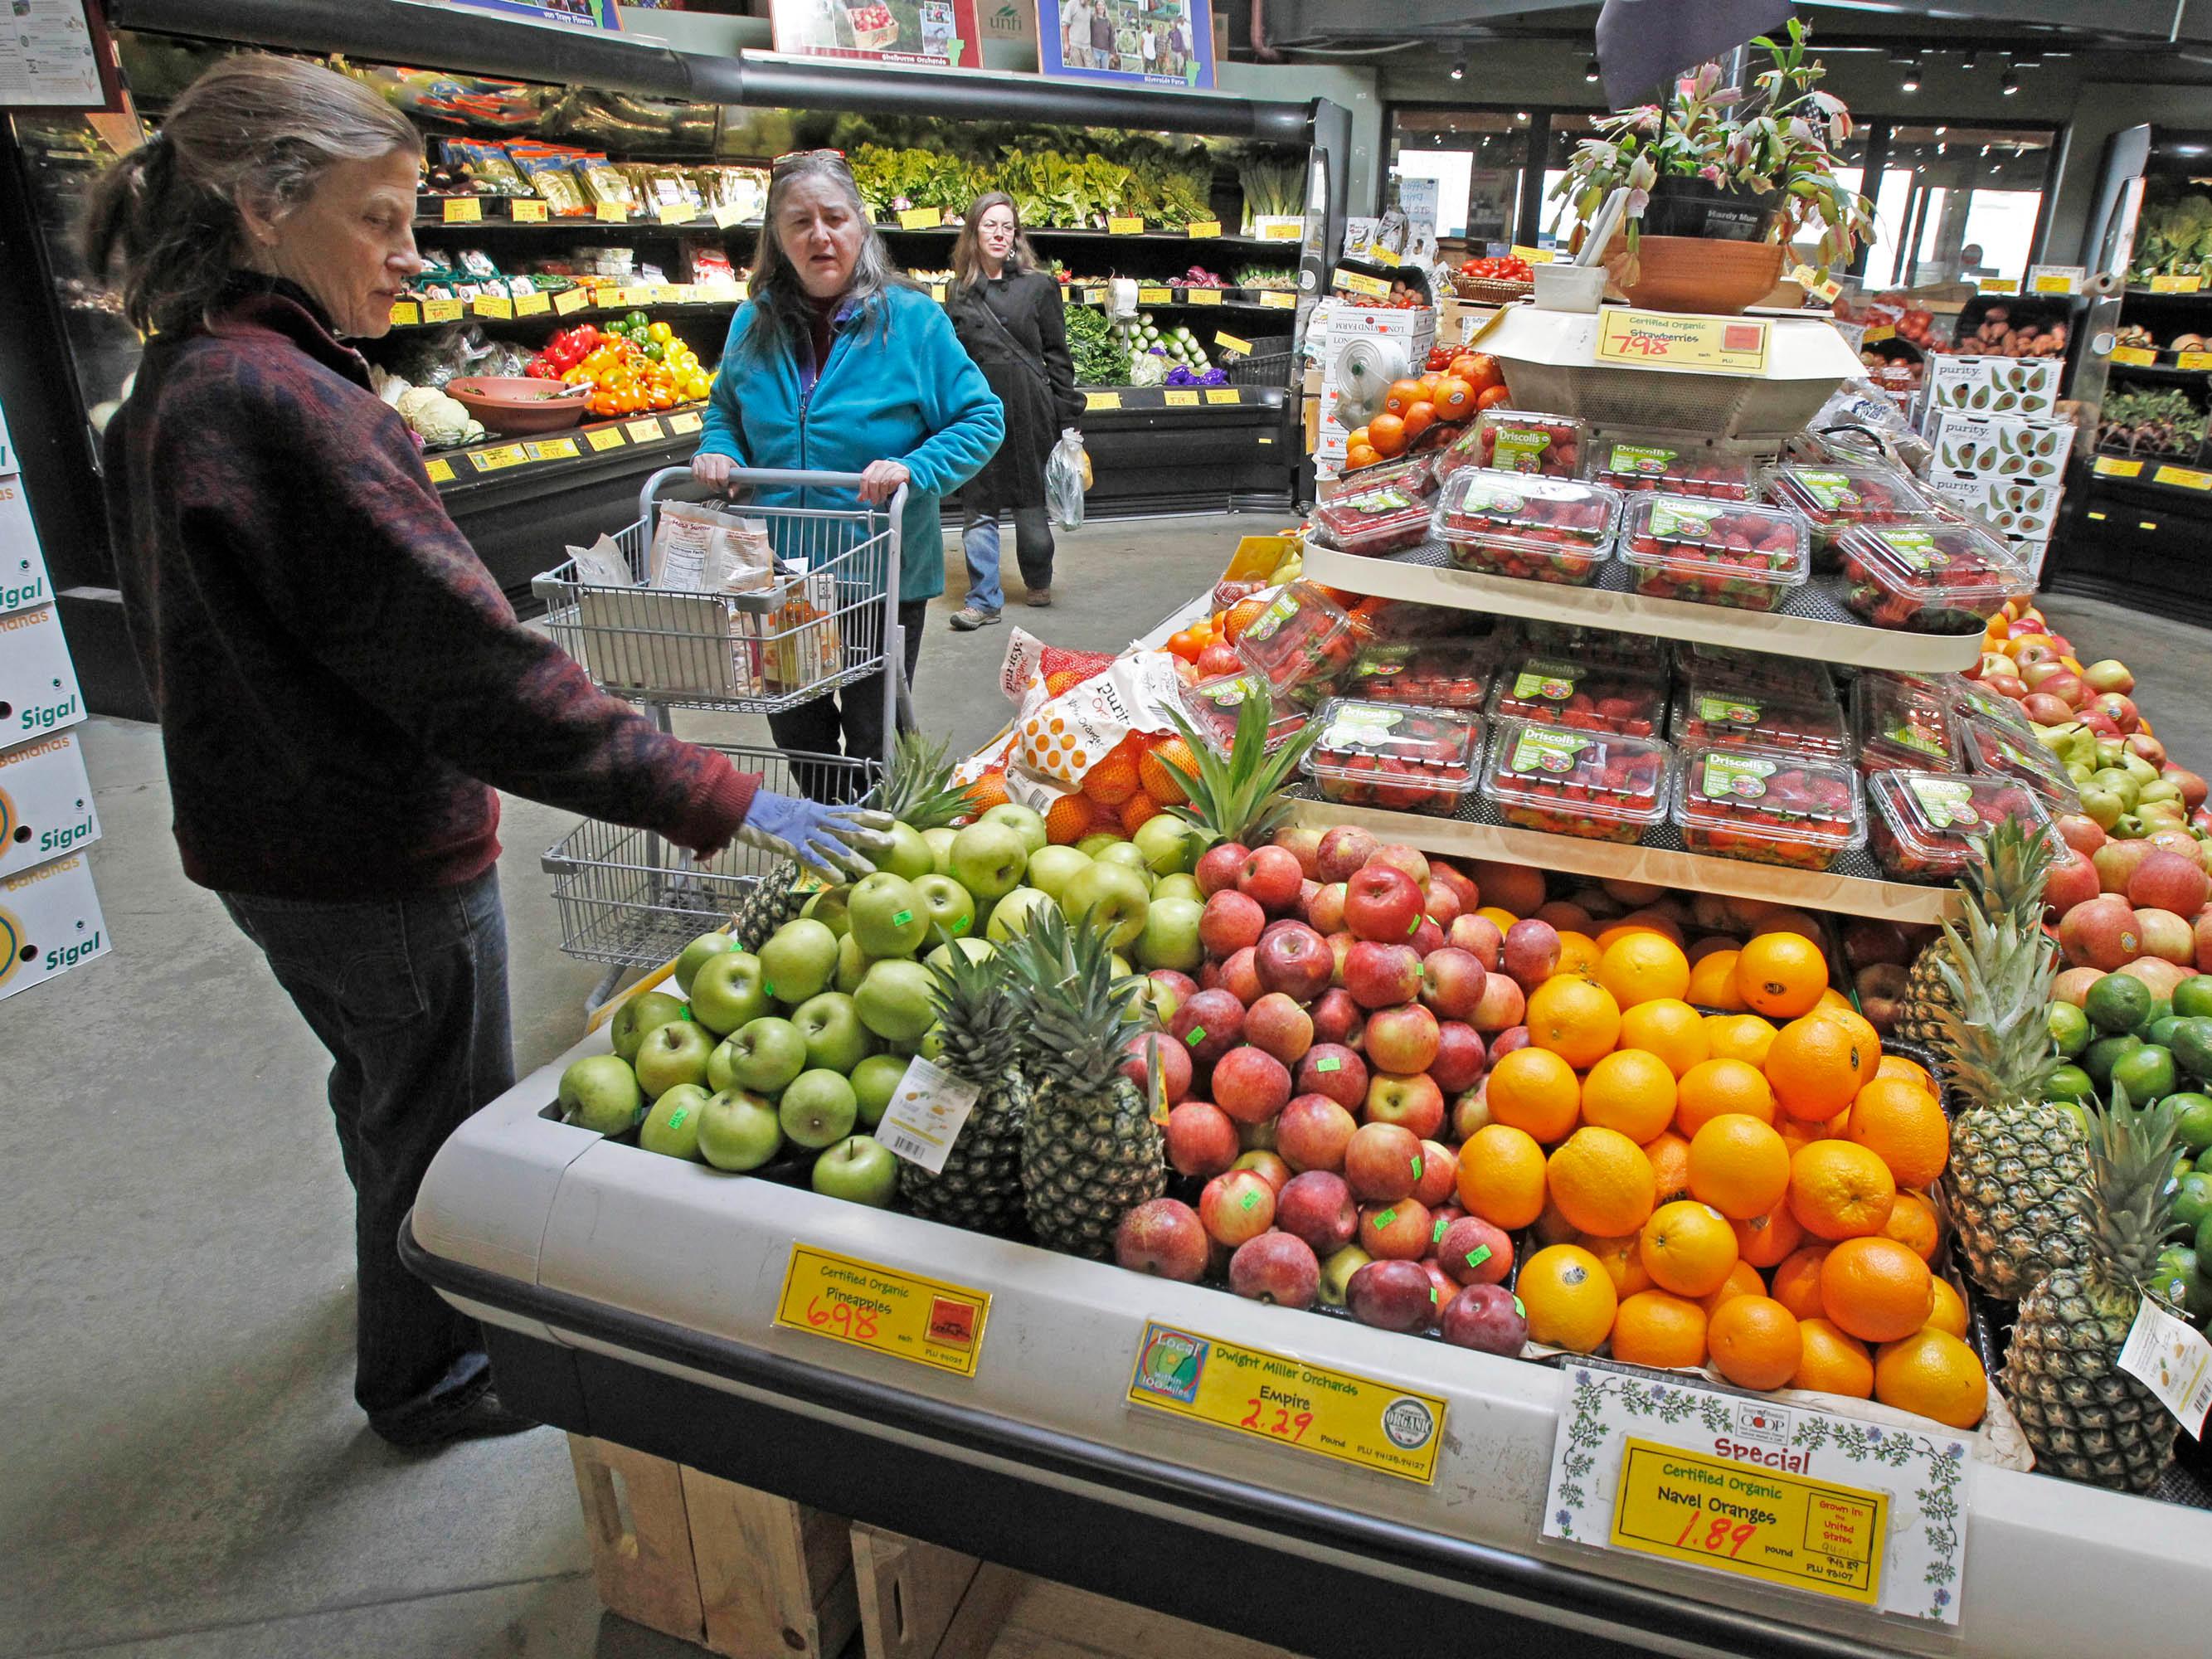 Photo: Shopping for produce (AP Photo)